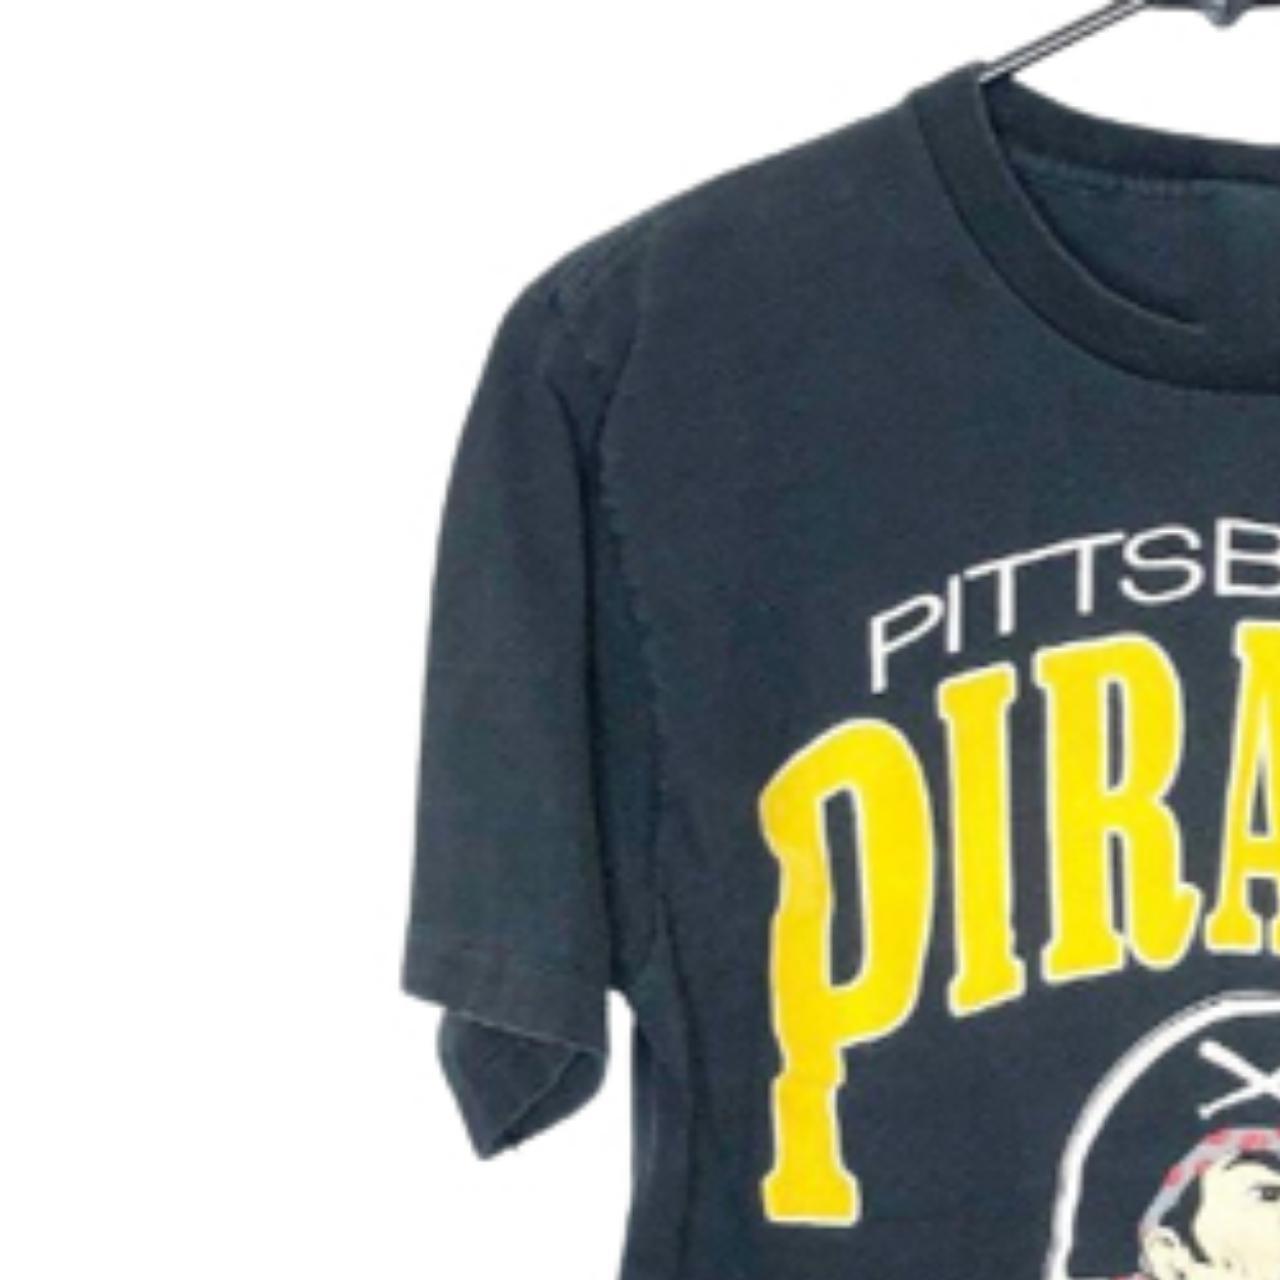 Pittsburgh Pirates True Fan MLB Men's Size XL Baseball Jersey